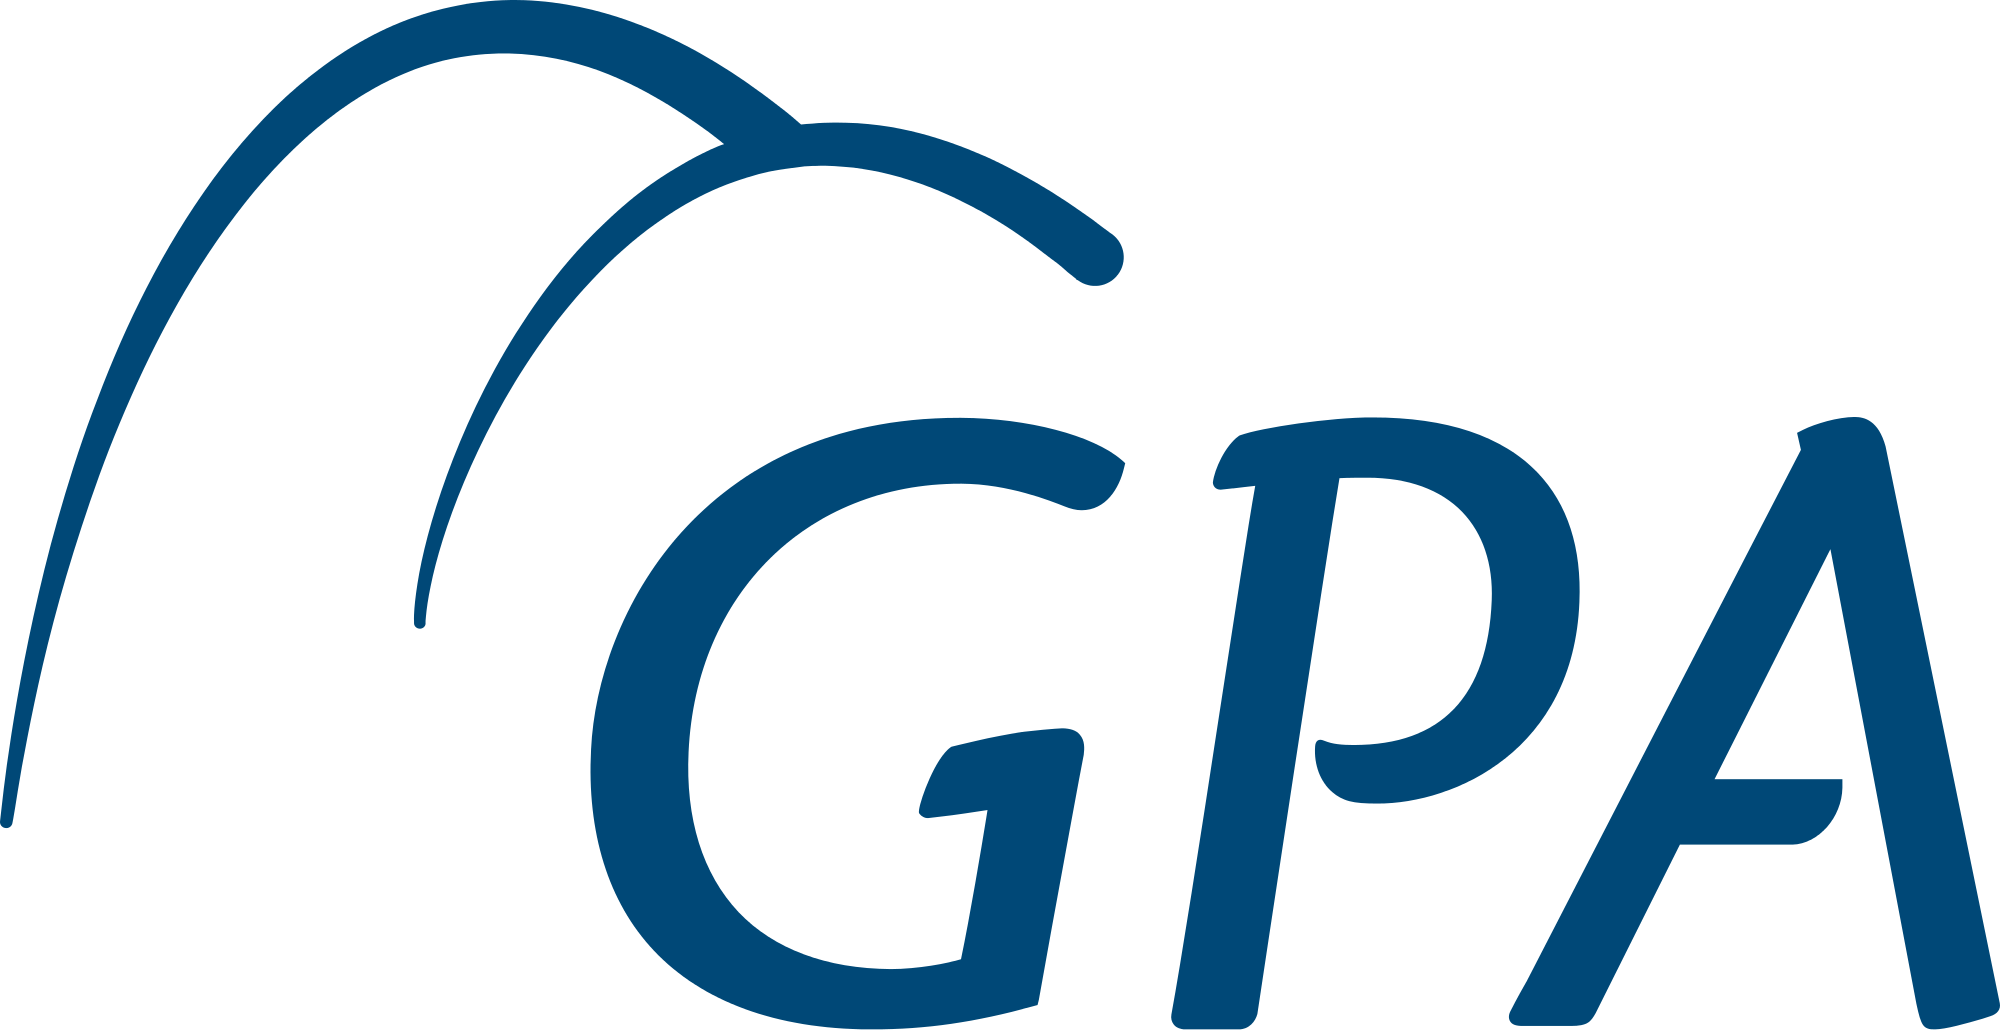 Gpa PNG - 67143